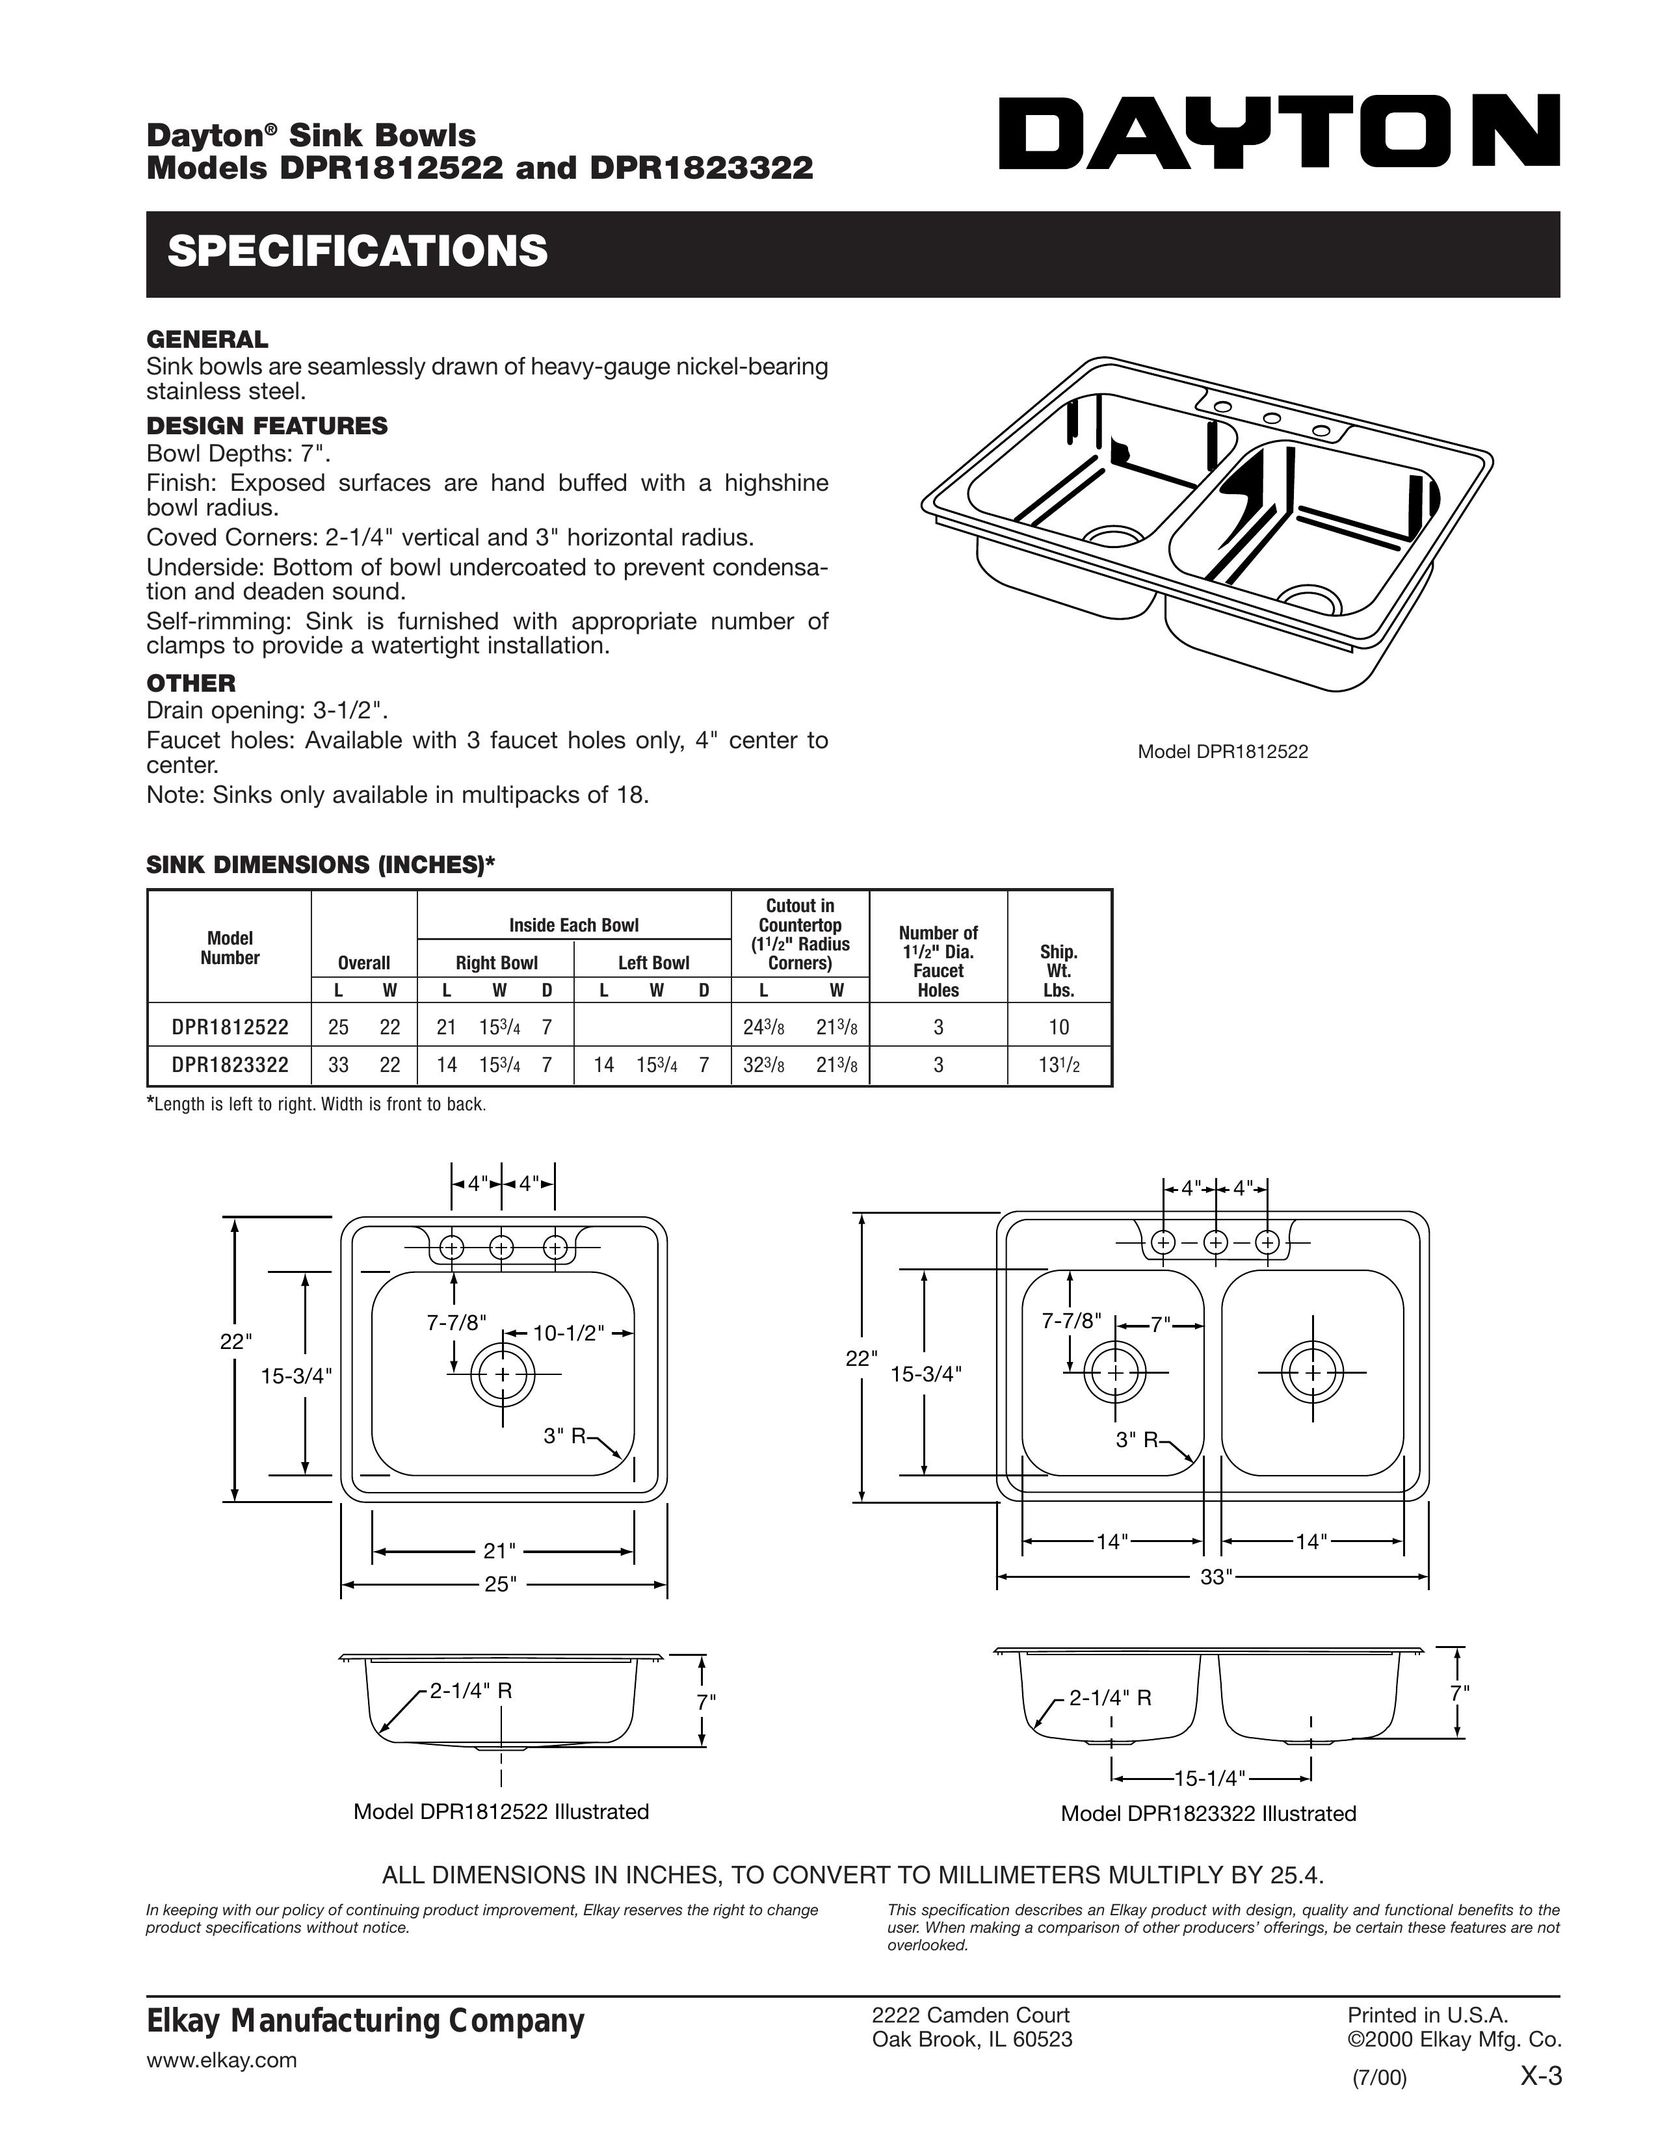 Dayton DPR1812522 Indoor Furnishings User Manual